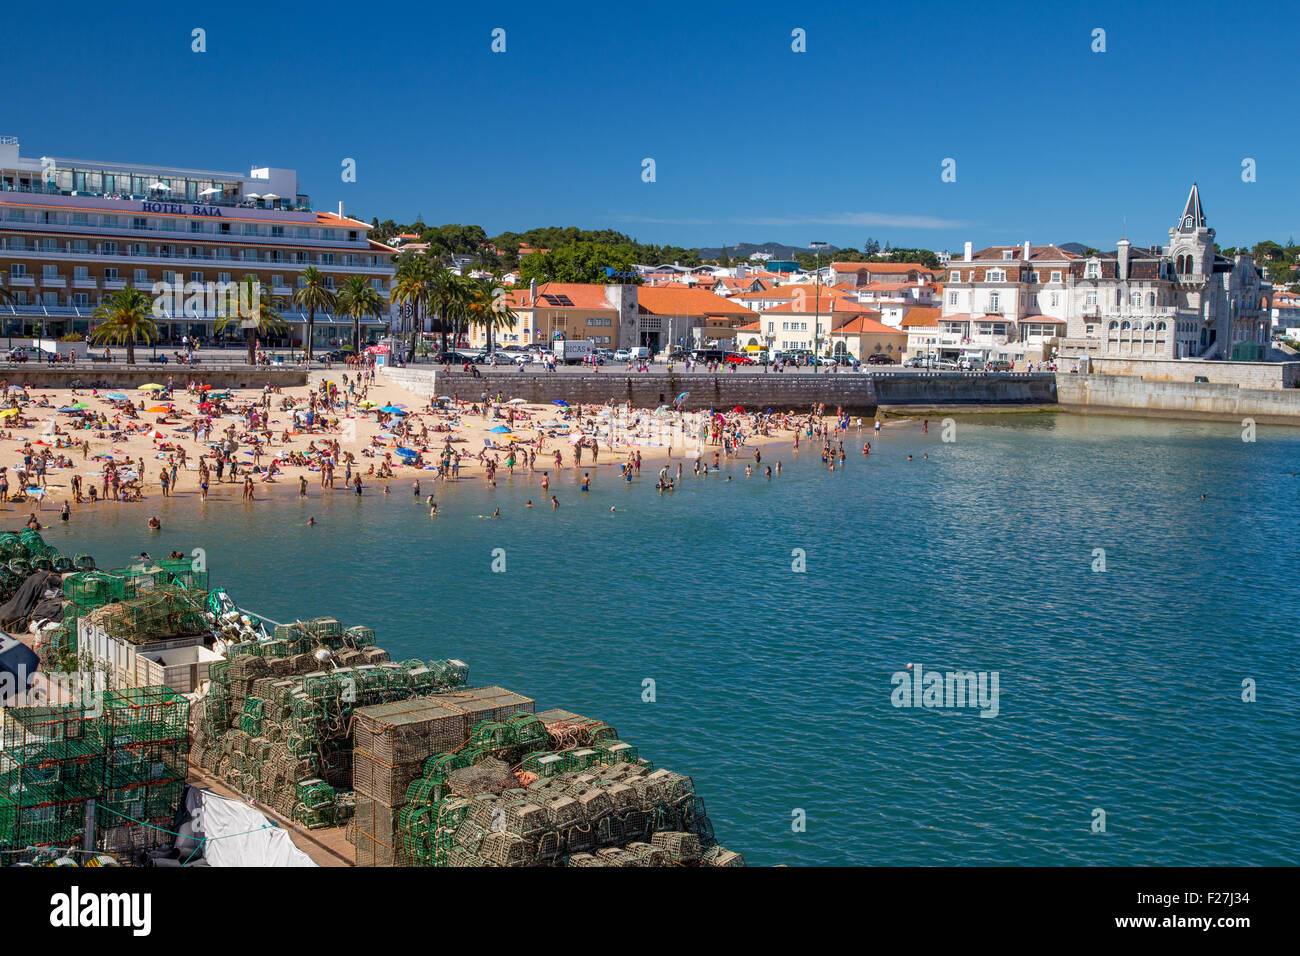 Praia da Ribeira beach in Cascais town, Portugal Stock Photo